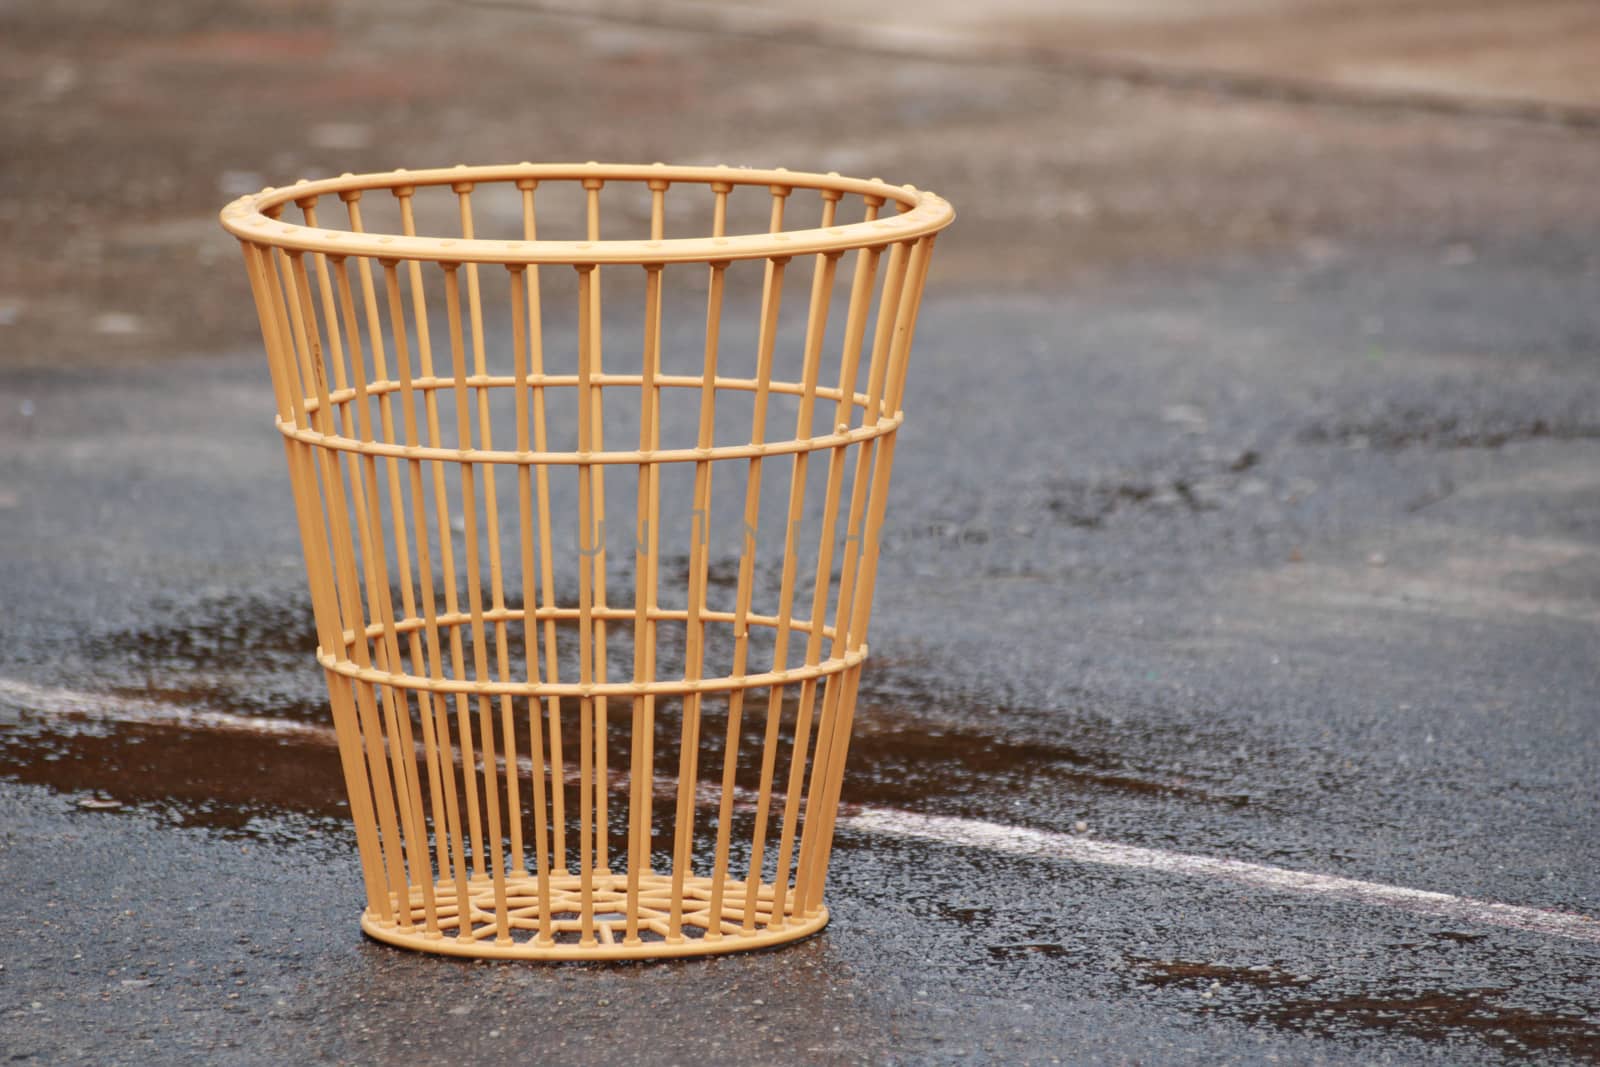 basket on the wet stadium by kaidevil